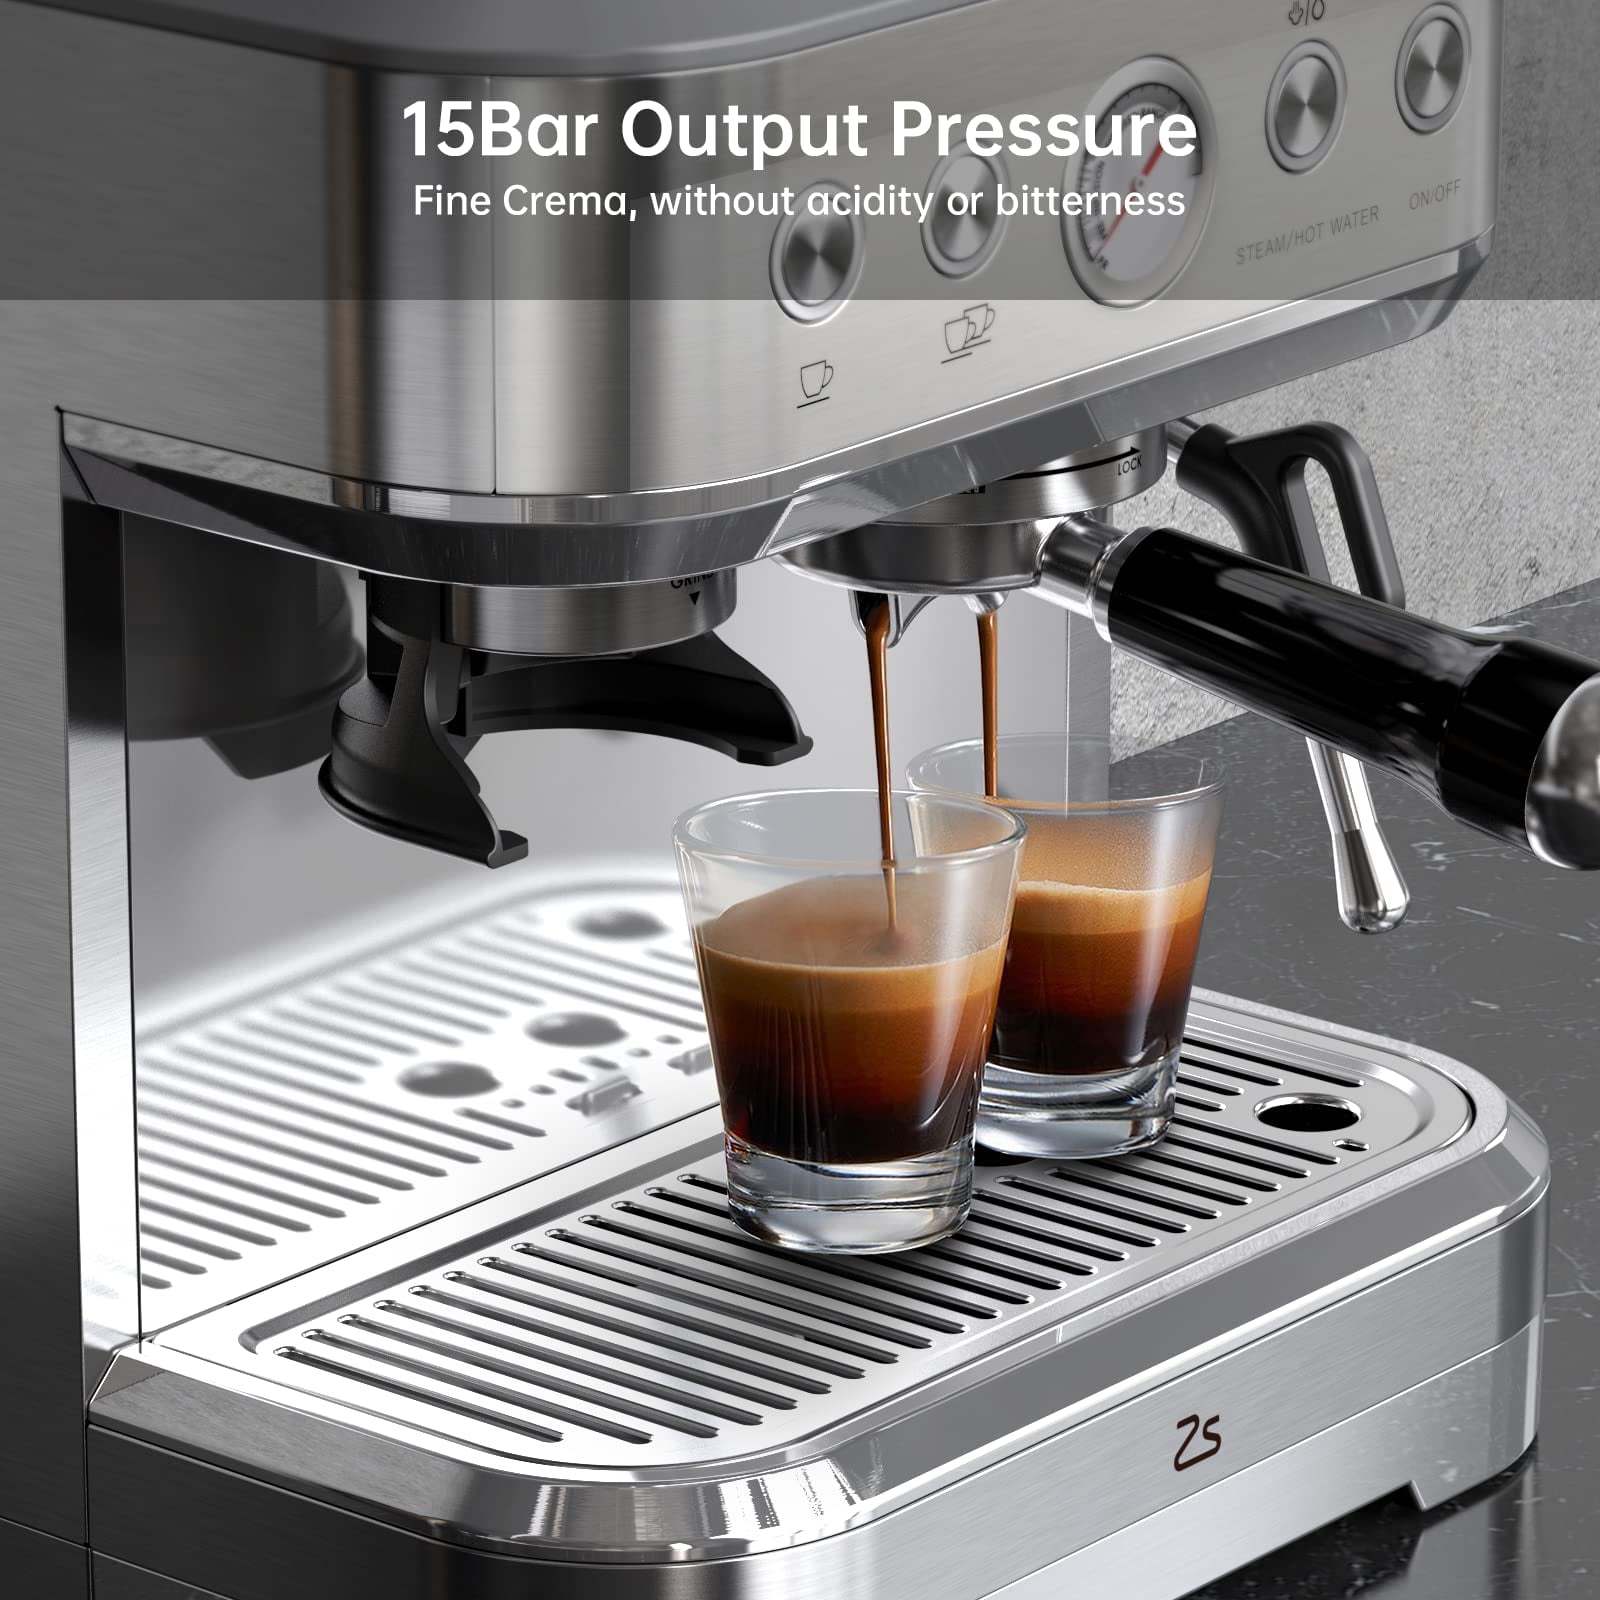 Mondawe Stainless Steel Automatic Espresso Machine in the Espresso